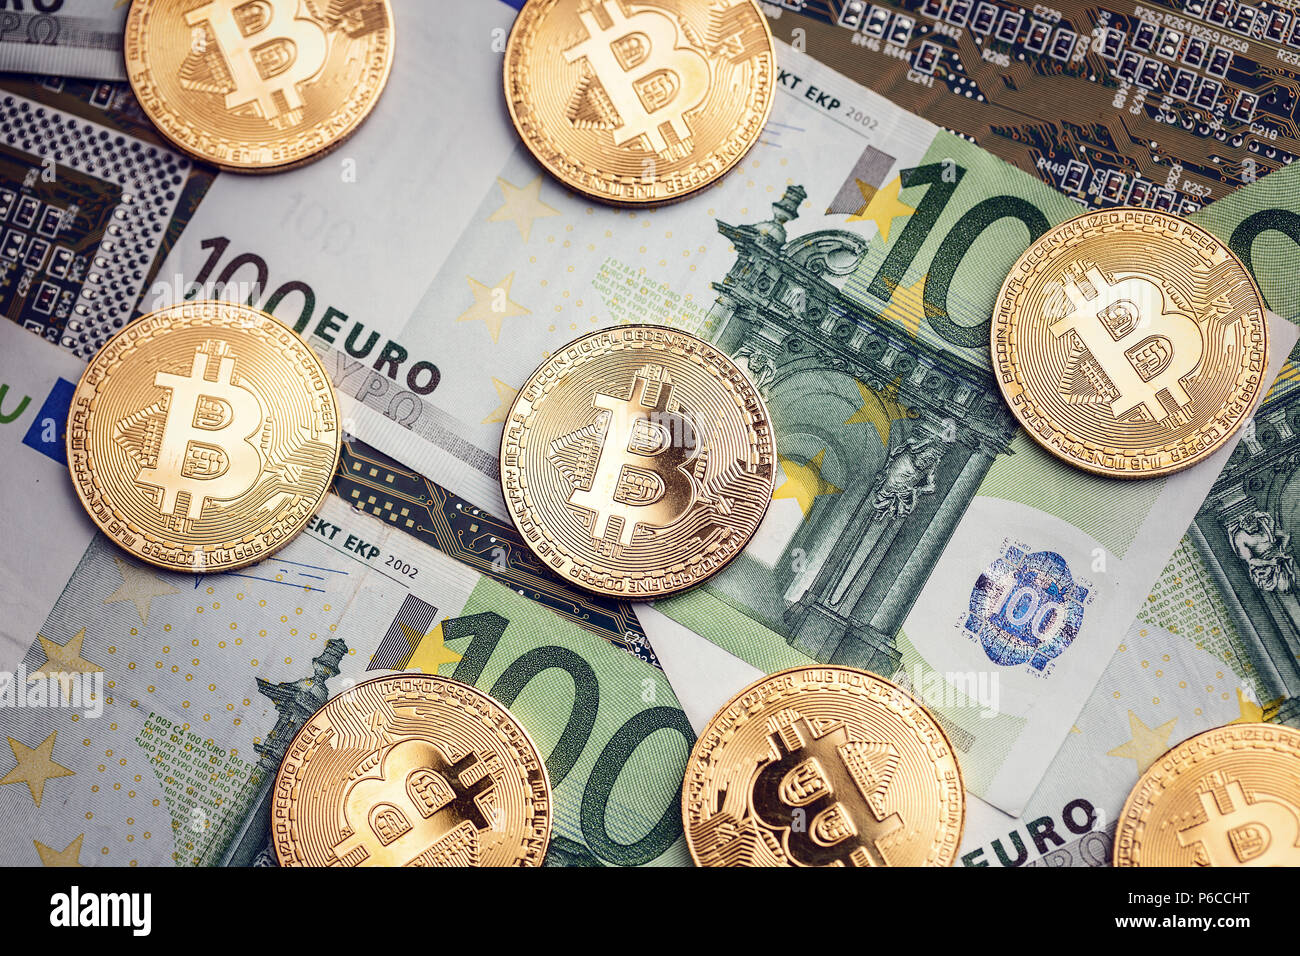 55 bitcoins to euros